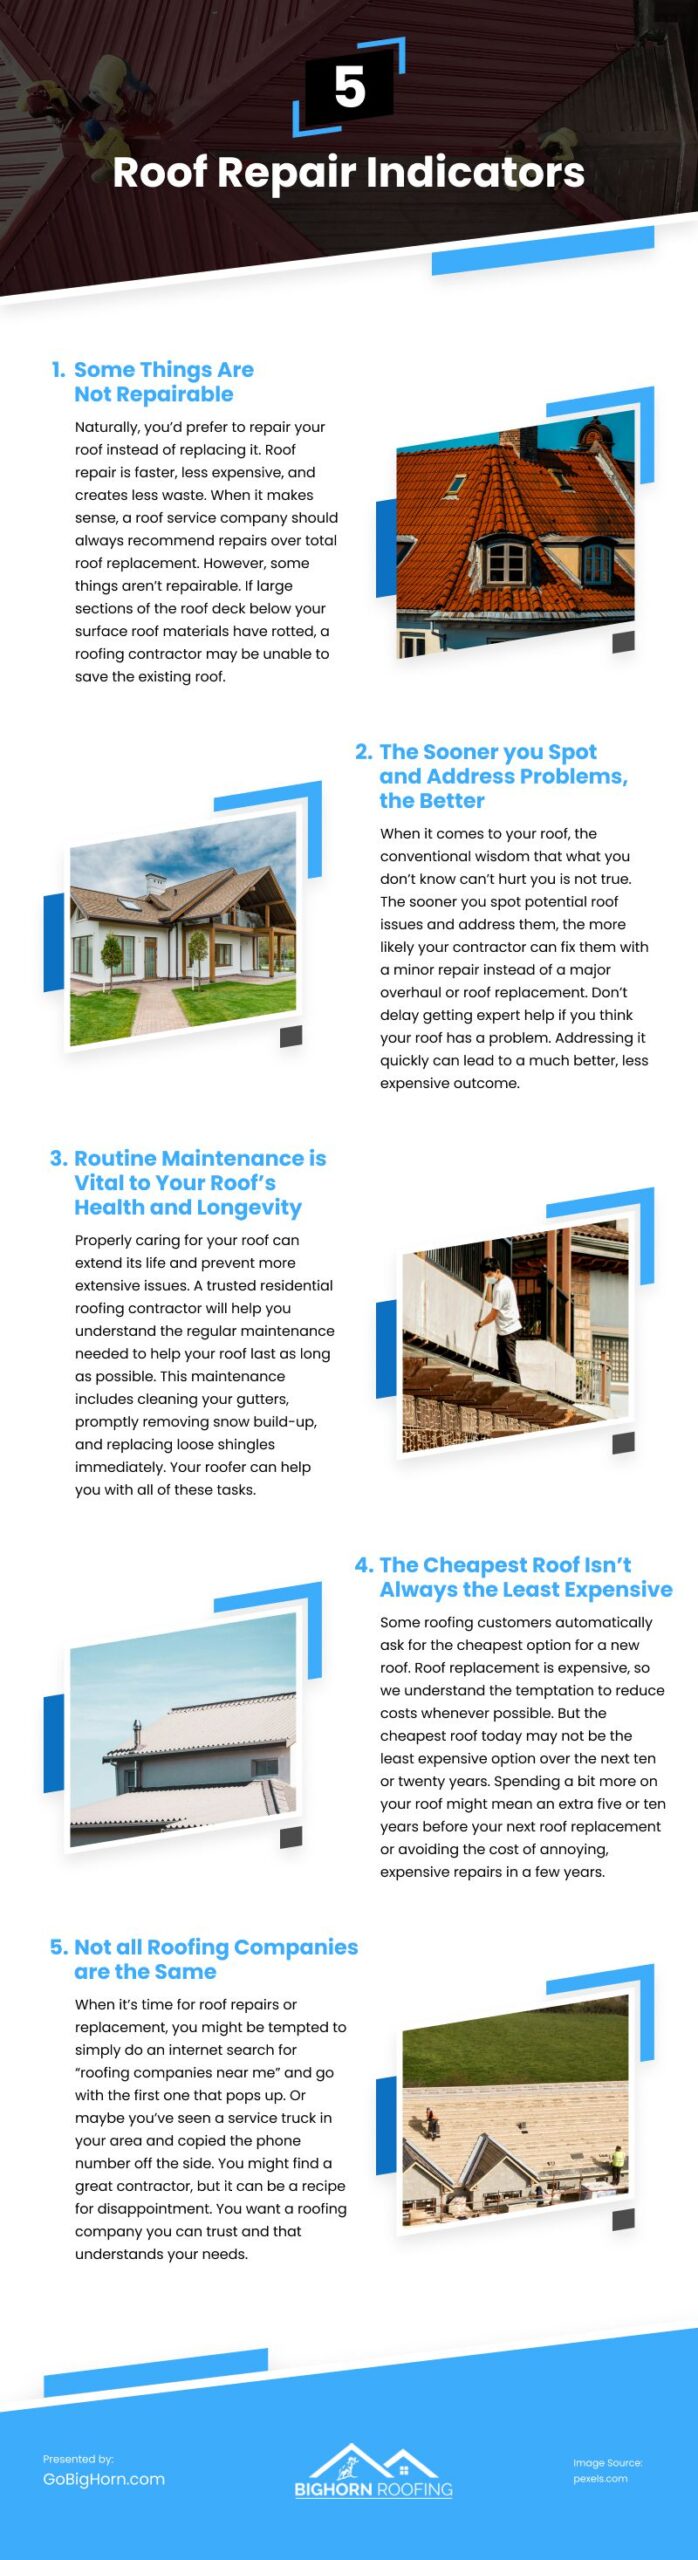 5 Roof Repair Indicators Infographic